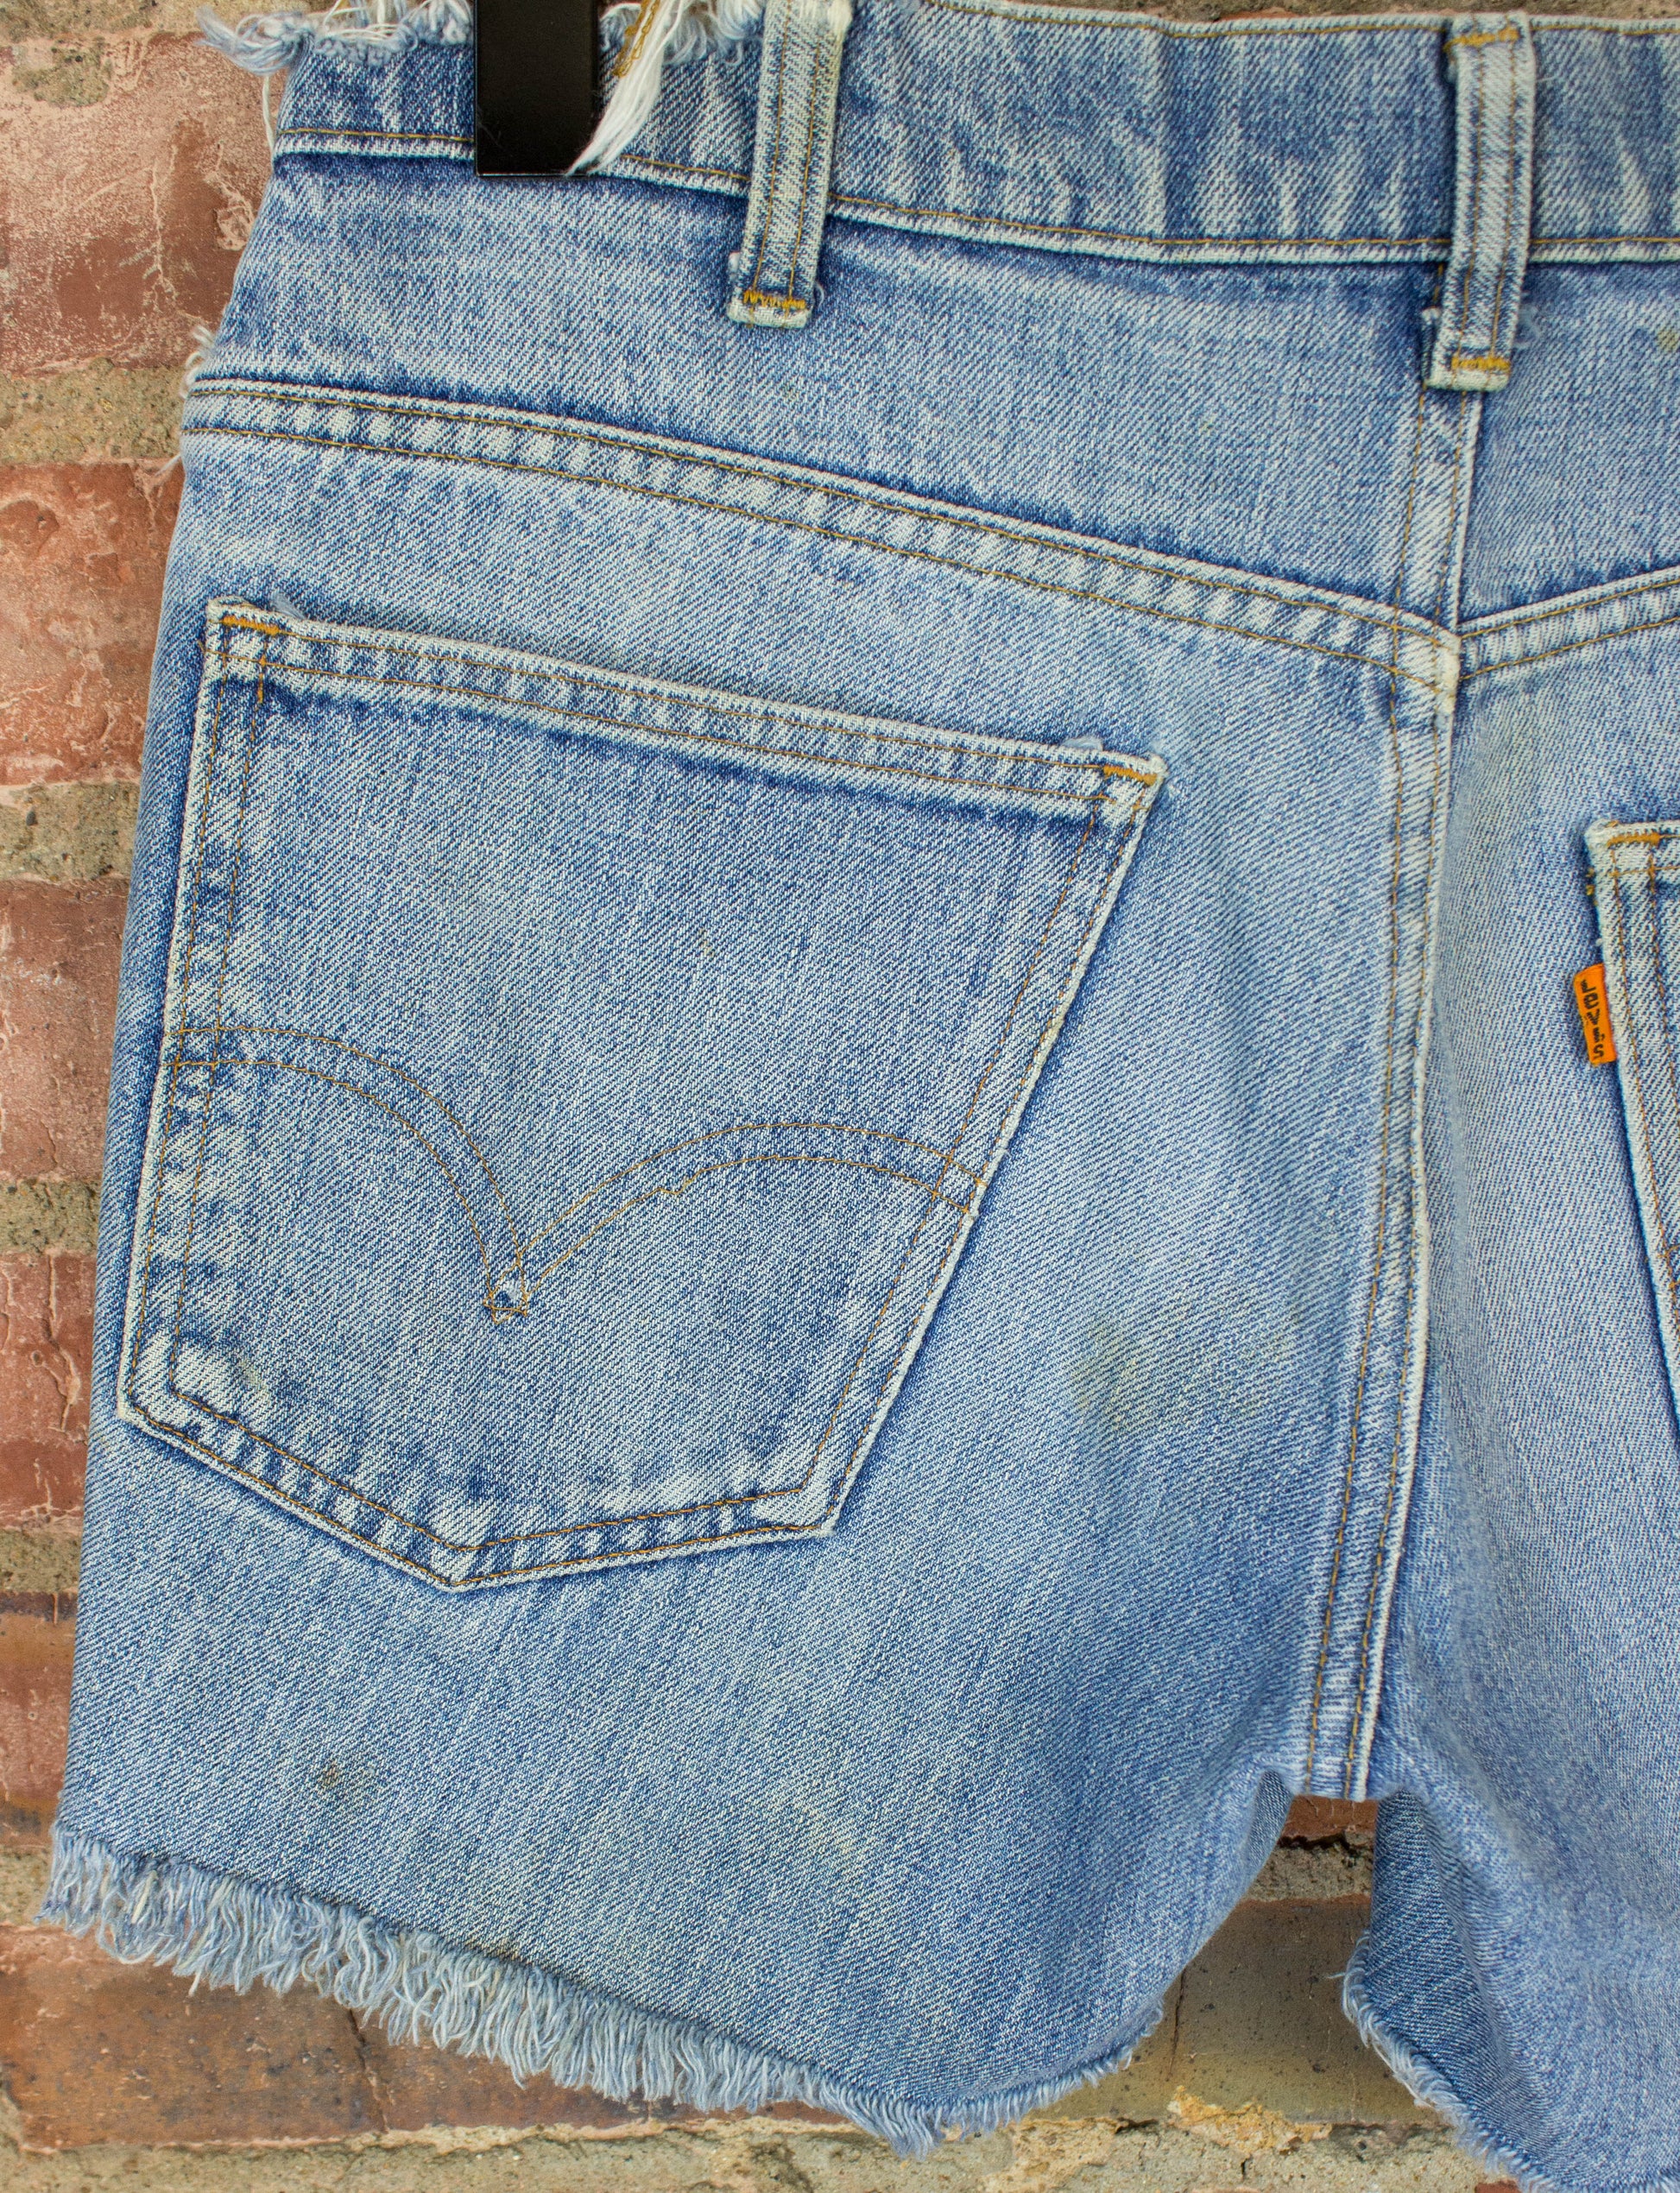 Vintage Levi's Cut Off Denim Shorts 70s Orange Tab Thrashed Light Wash 30 Waist